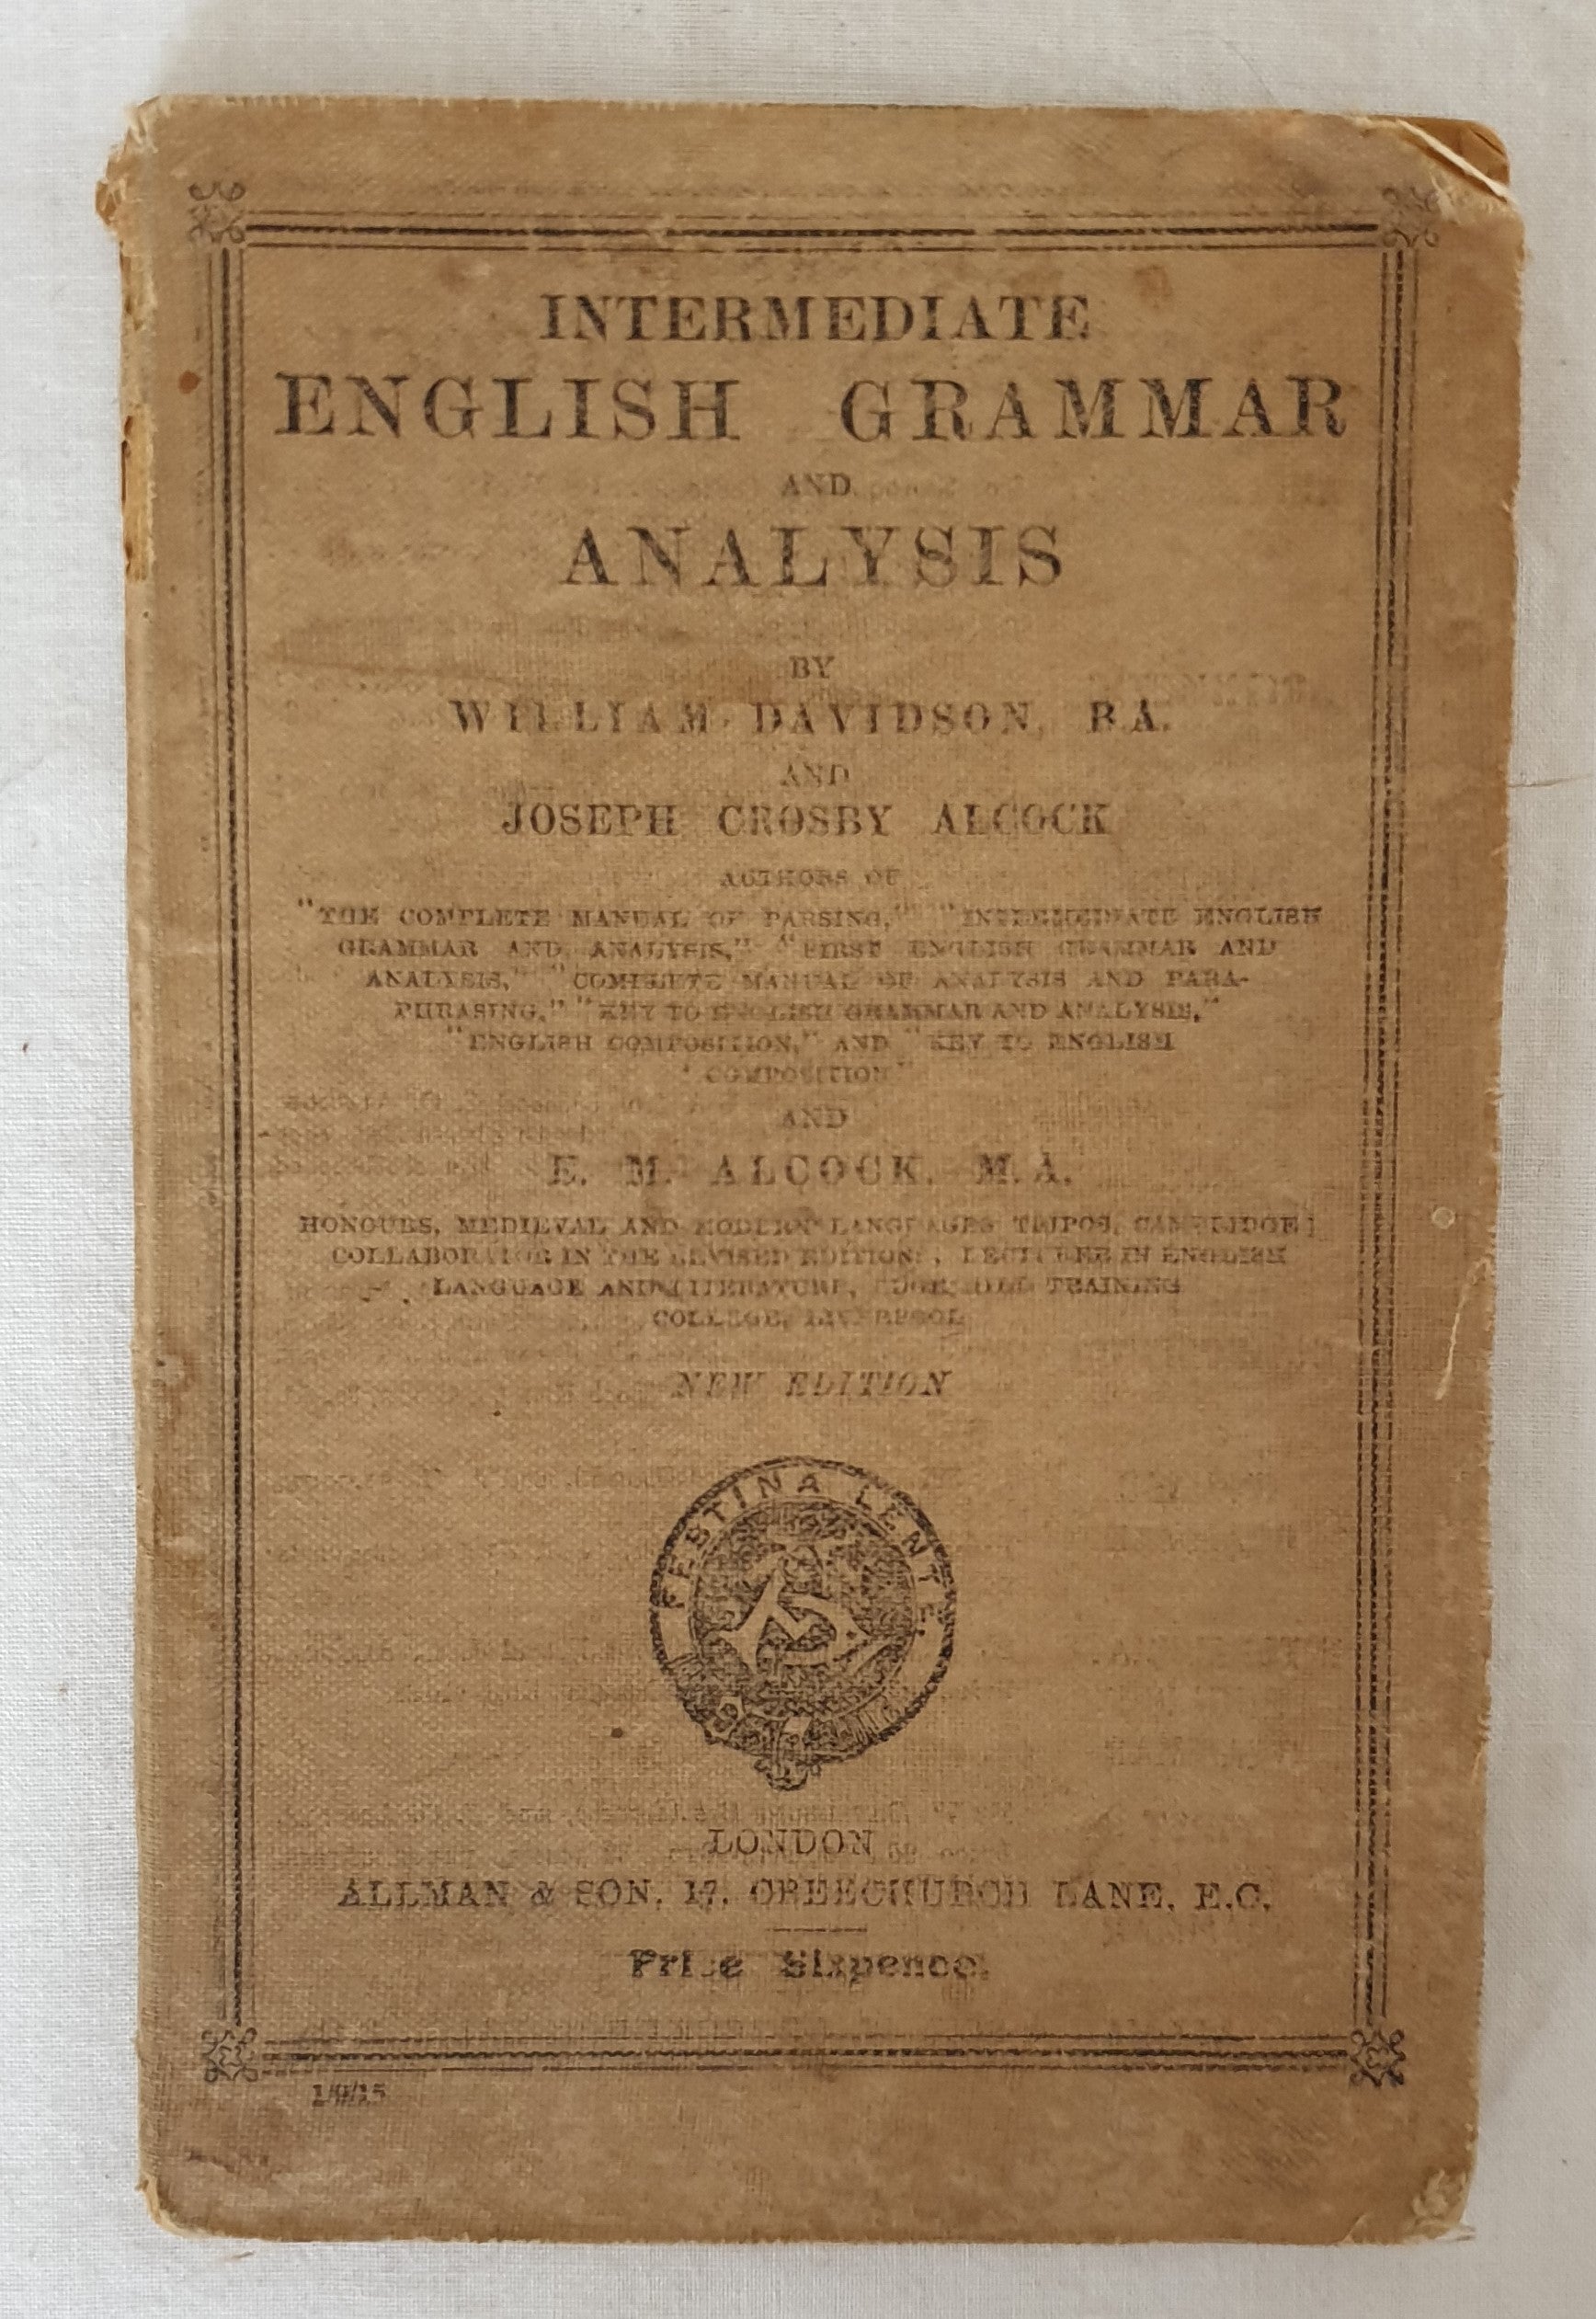 Intermediate English Grammar and Analysis  by William Davidson and Joseph Crosby Alcock and E. M. Alcock